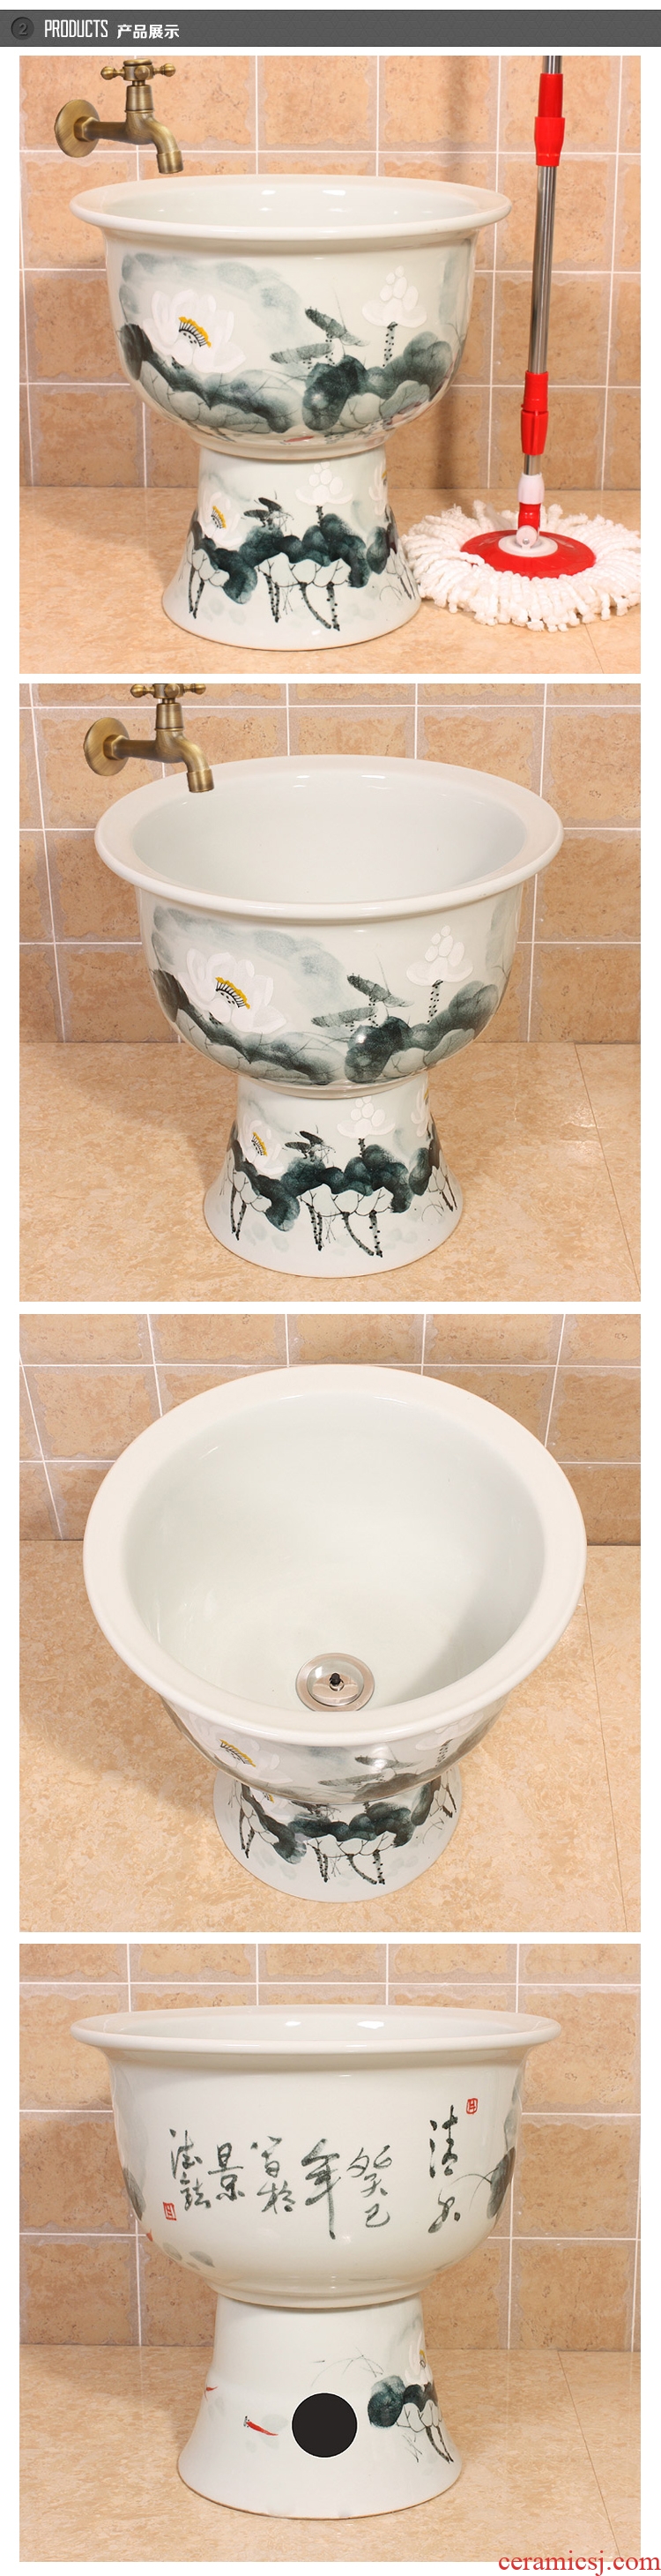 Jingdezhen ceramic mop JingYuXuan white lotus pool under the large fission art basin mop mop pool